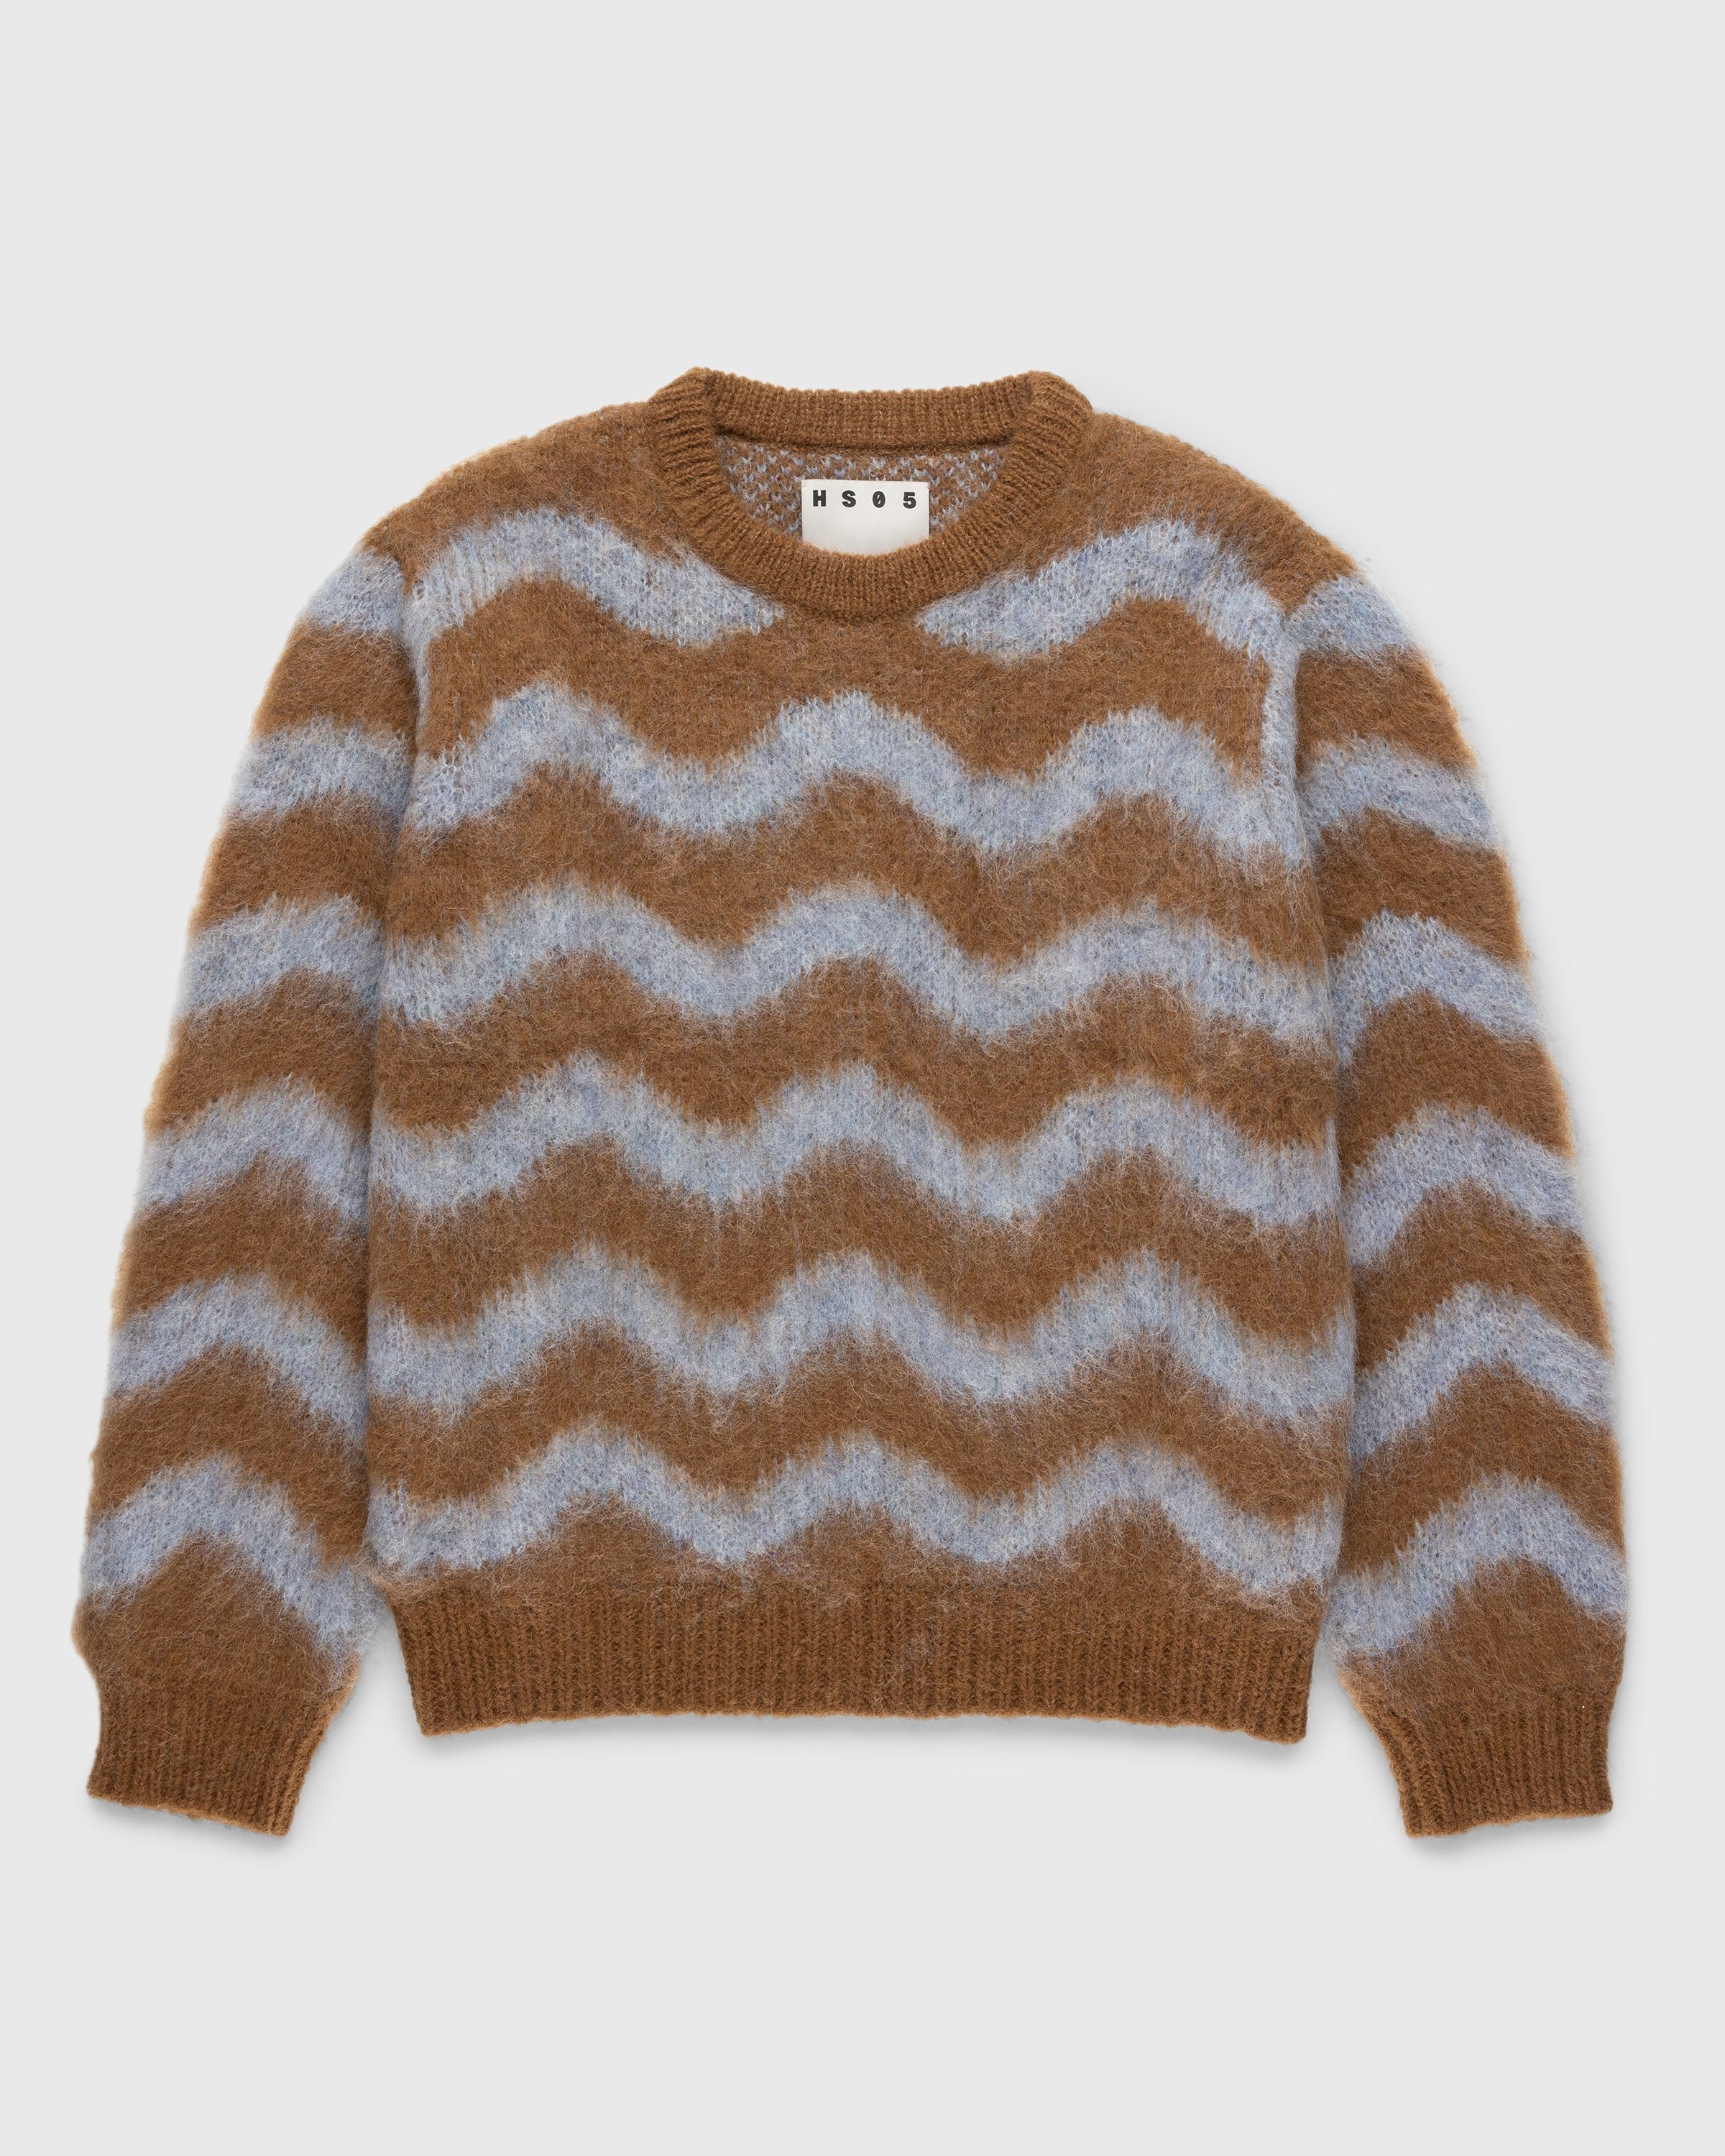 Highsnobiety HS05 - Alpaca Fuzzy Wave Sweater Light Blue/Brown - Clothing - Multi - Image 1